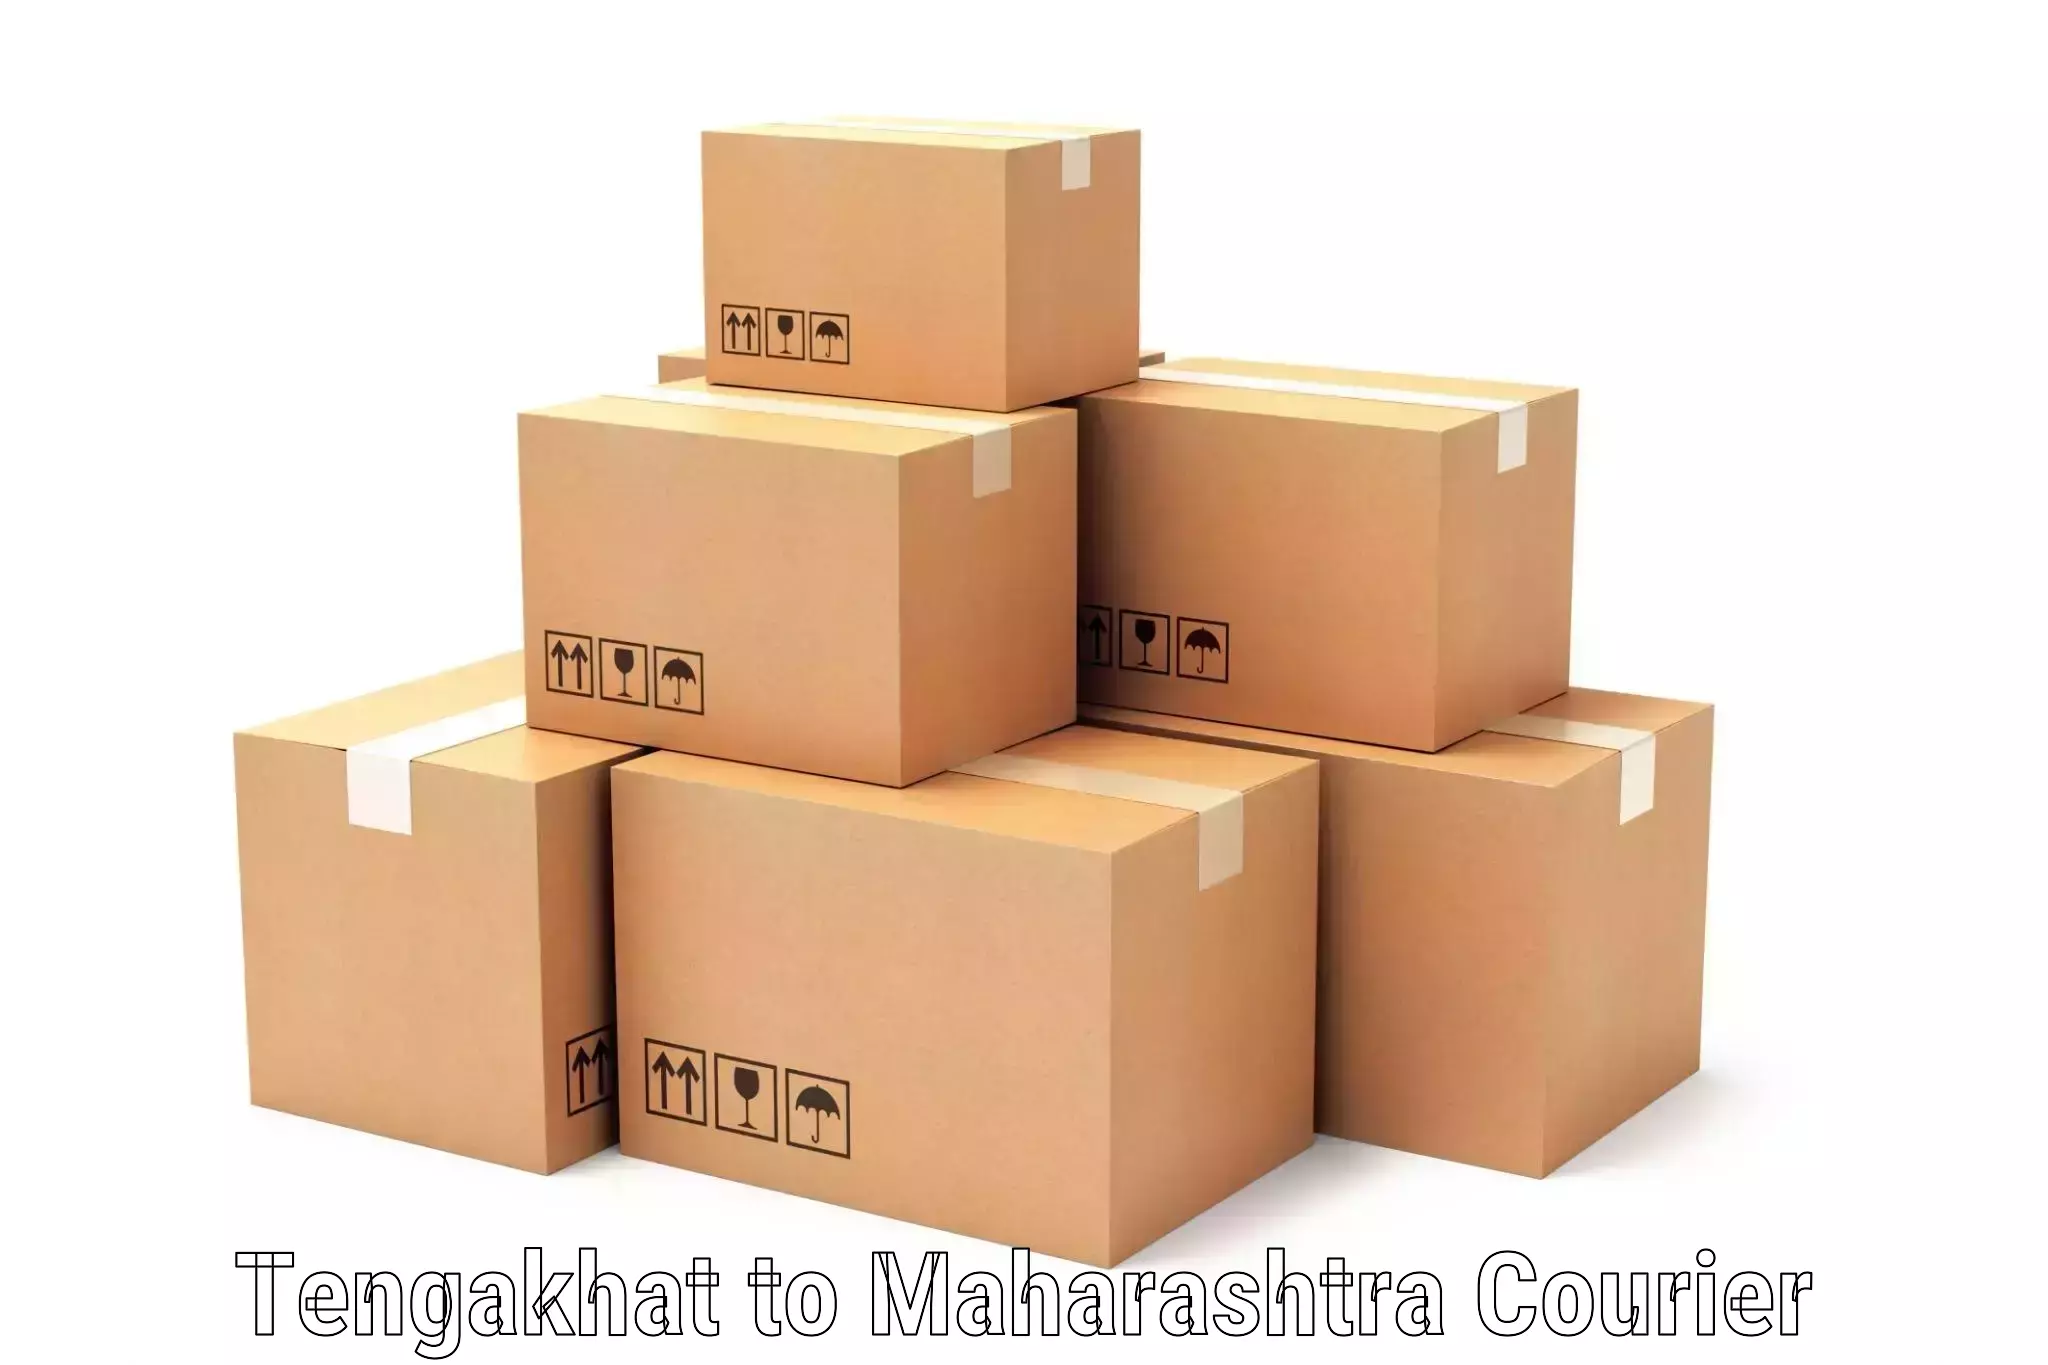 Supply chain efficiency in Tengakhat to Maharashtra